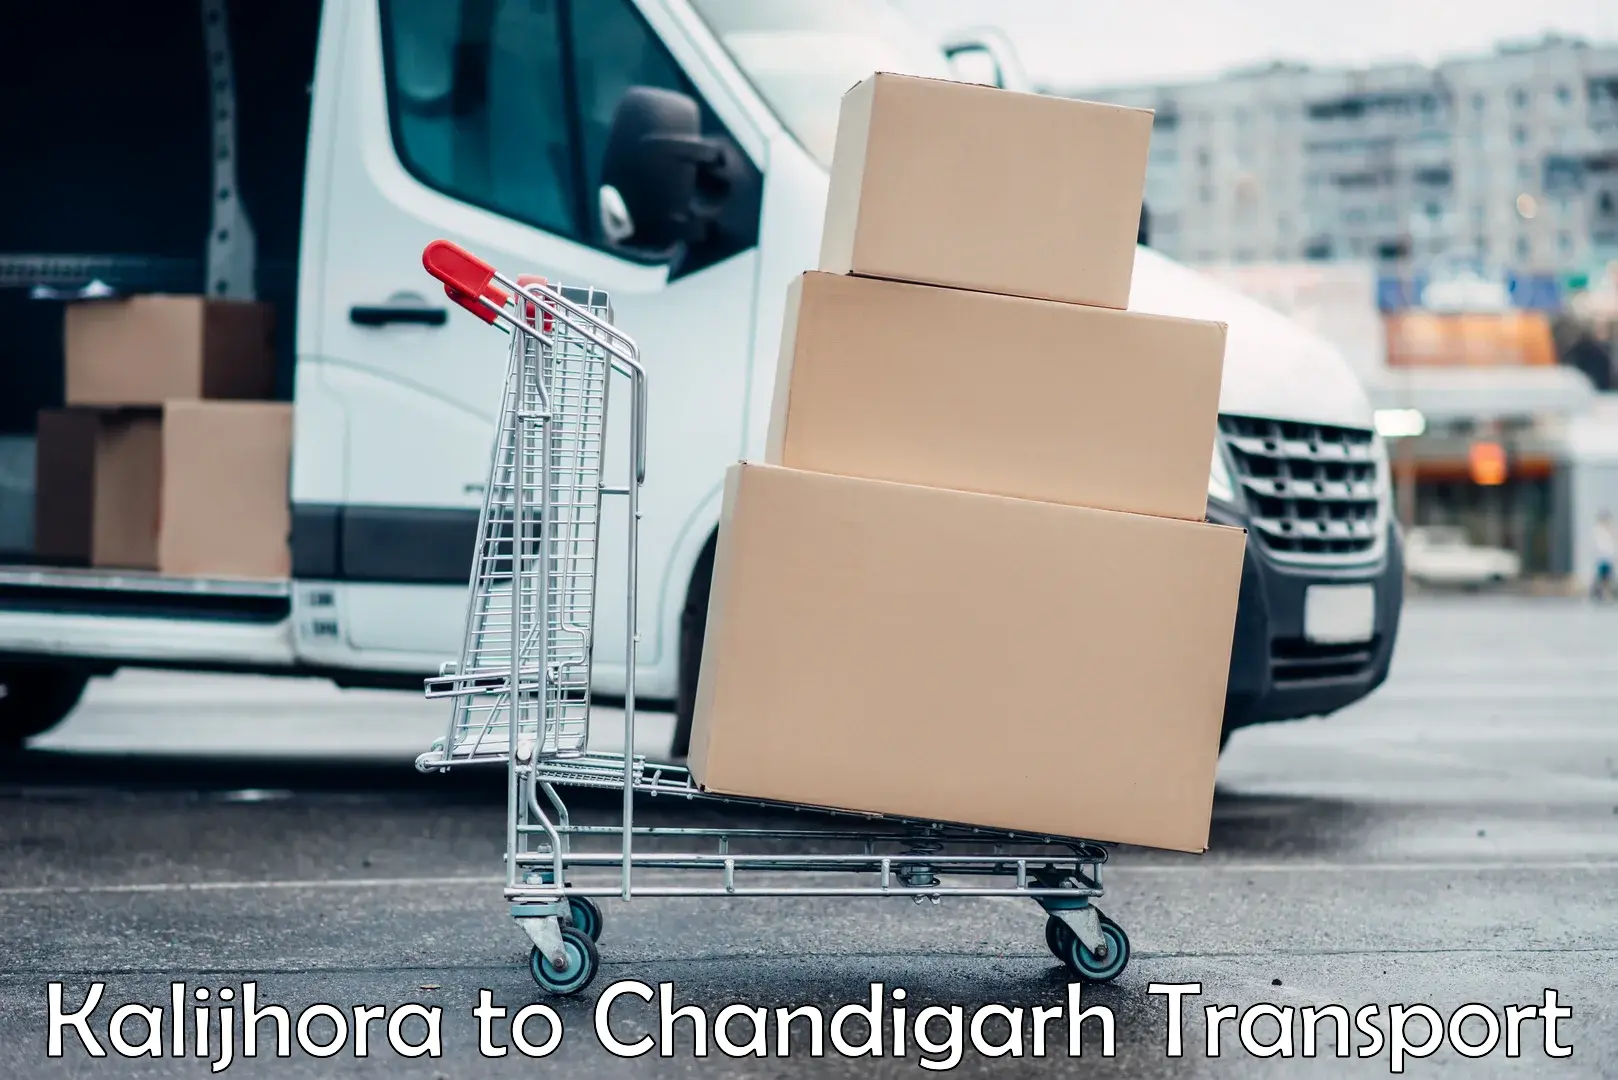 Truck transport companies in India Kalijhora to Chandigarh